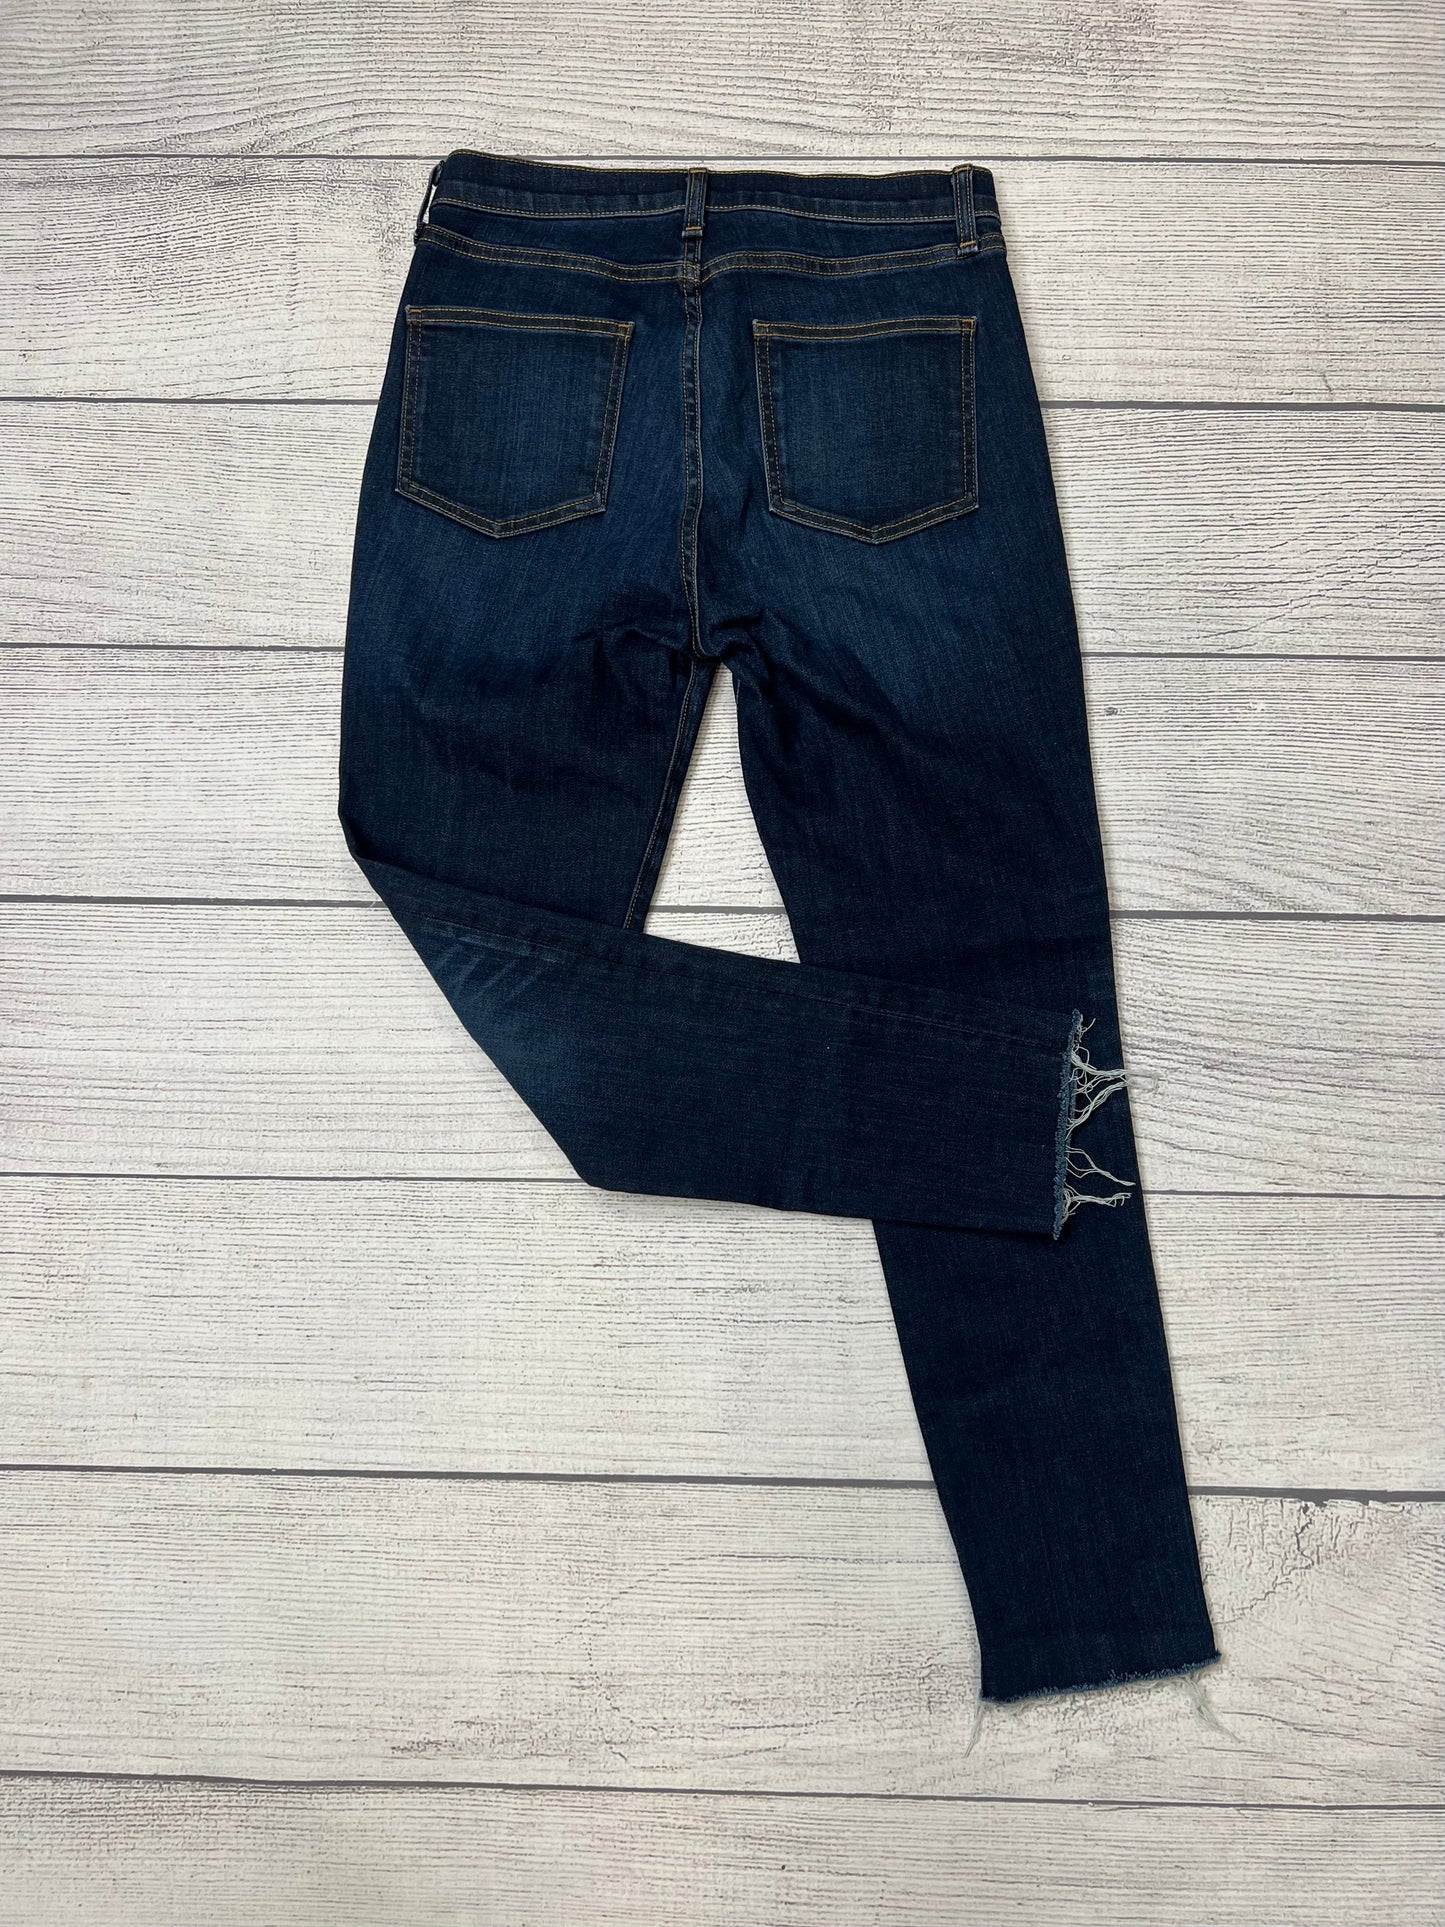 Jeans Designer By Veronica Beard  Size: 6